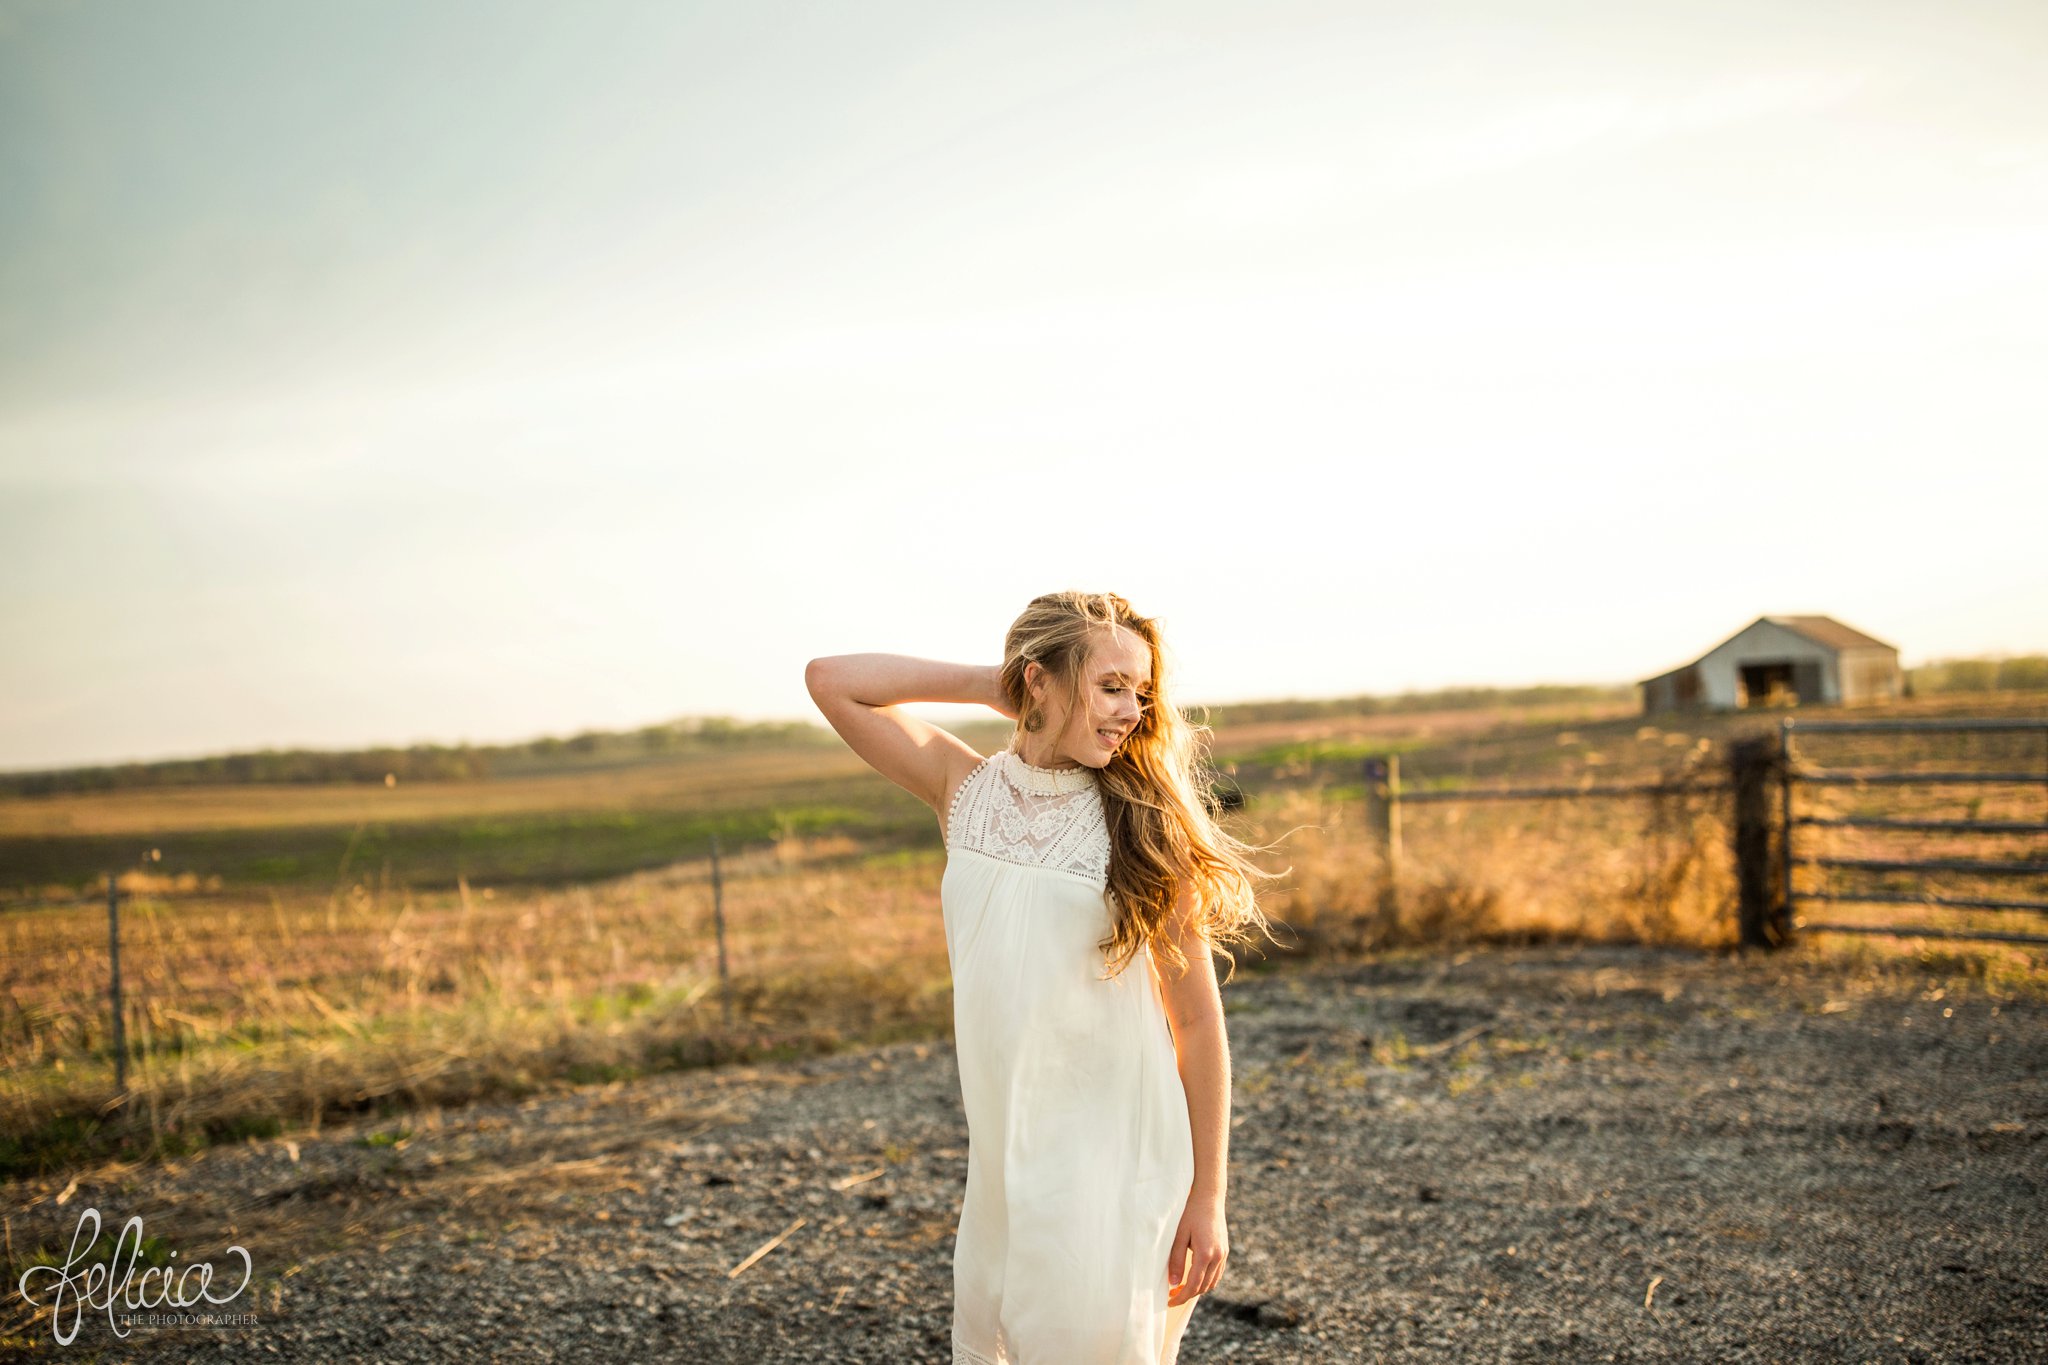 senior pictures | images by feliciathephotographer.com | Kansas City | rustic | long blonde hair | nature background | farm house | white dress | elegant | dramatic pose | farm pictures